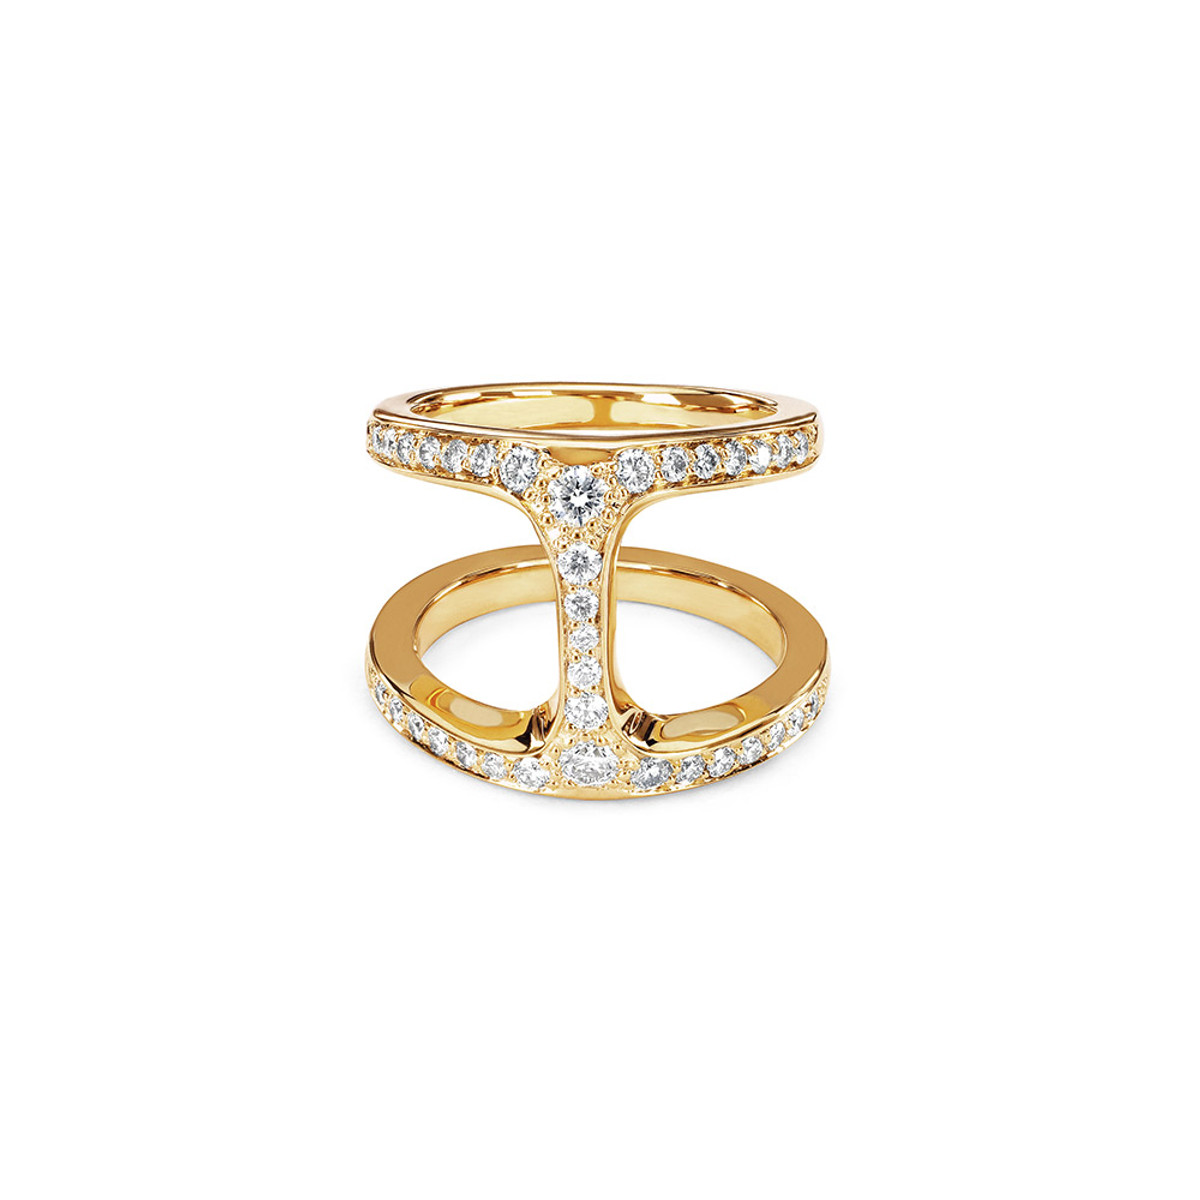 Hoorsenbuhs 18K Yellow Gold Dame Phantom Ring with Diamonds-57487